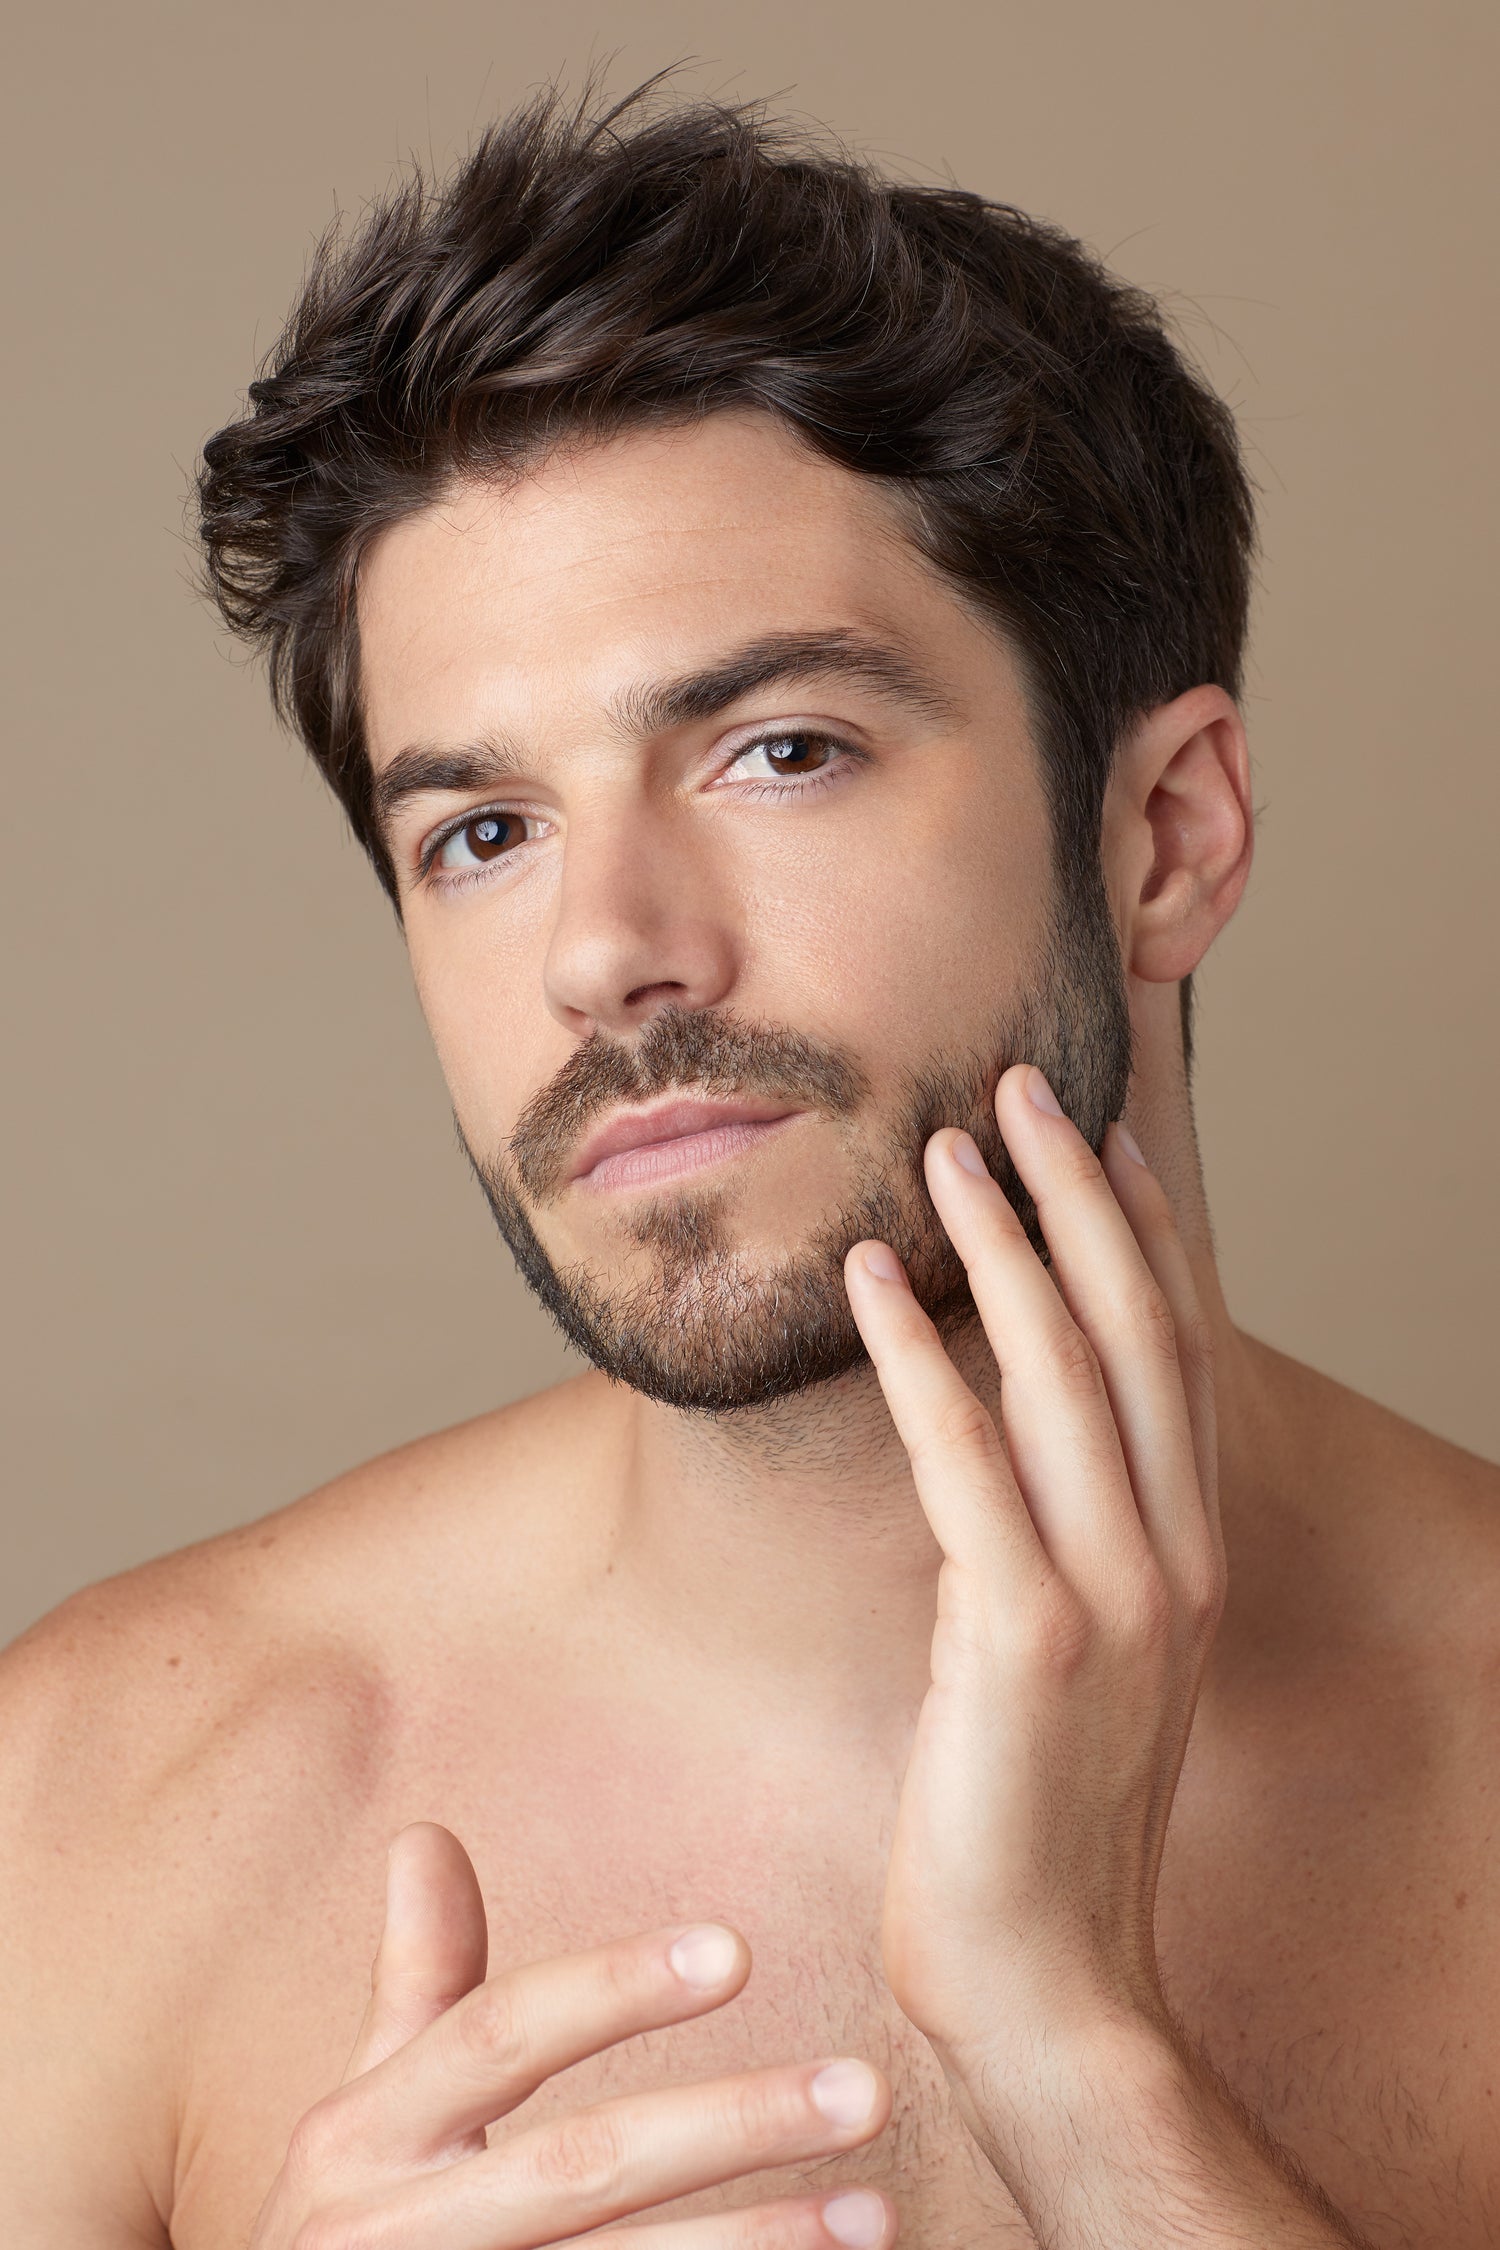 Sensitive skin: A men's guide to shaving